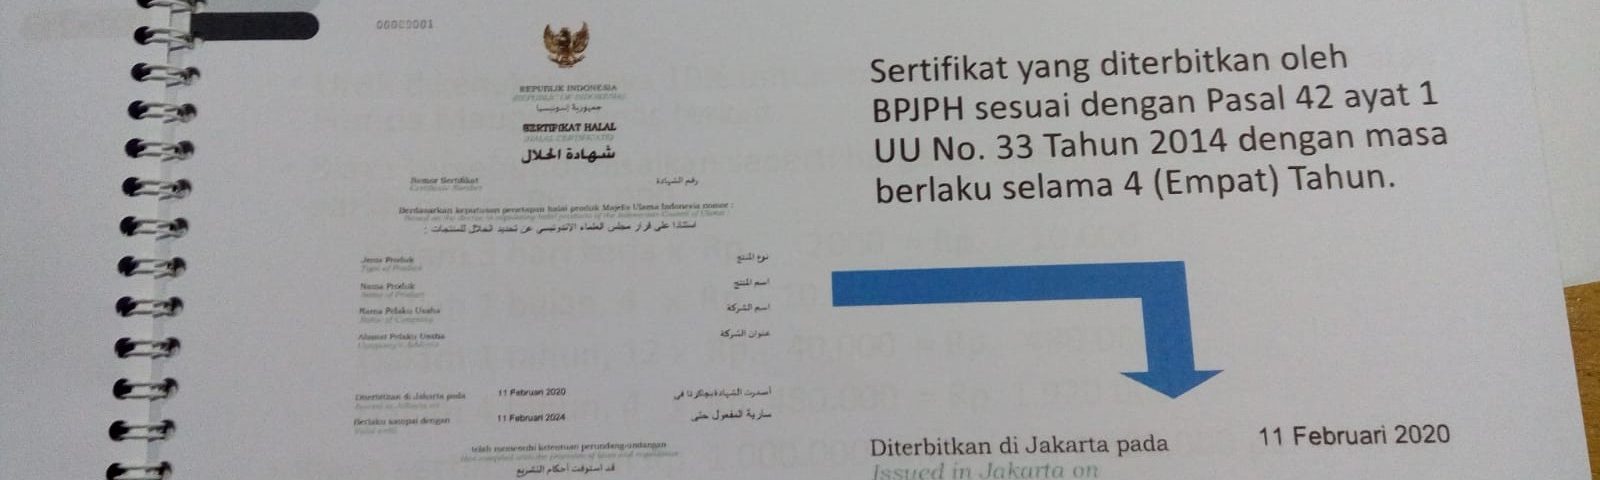 Sertifikat Halal BPJPH Lewat Jasa Kami Sahabat Halal Indonesia